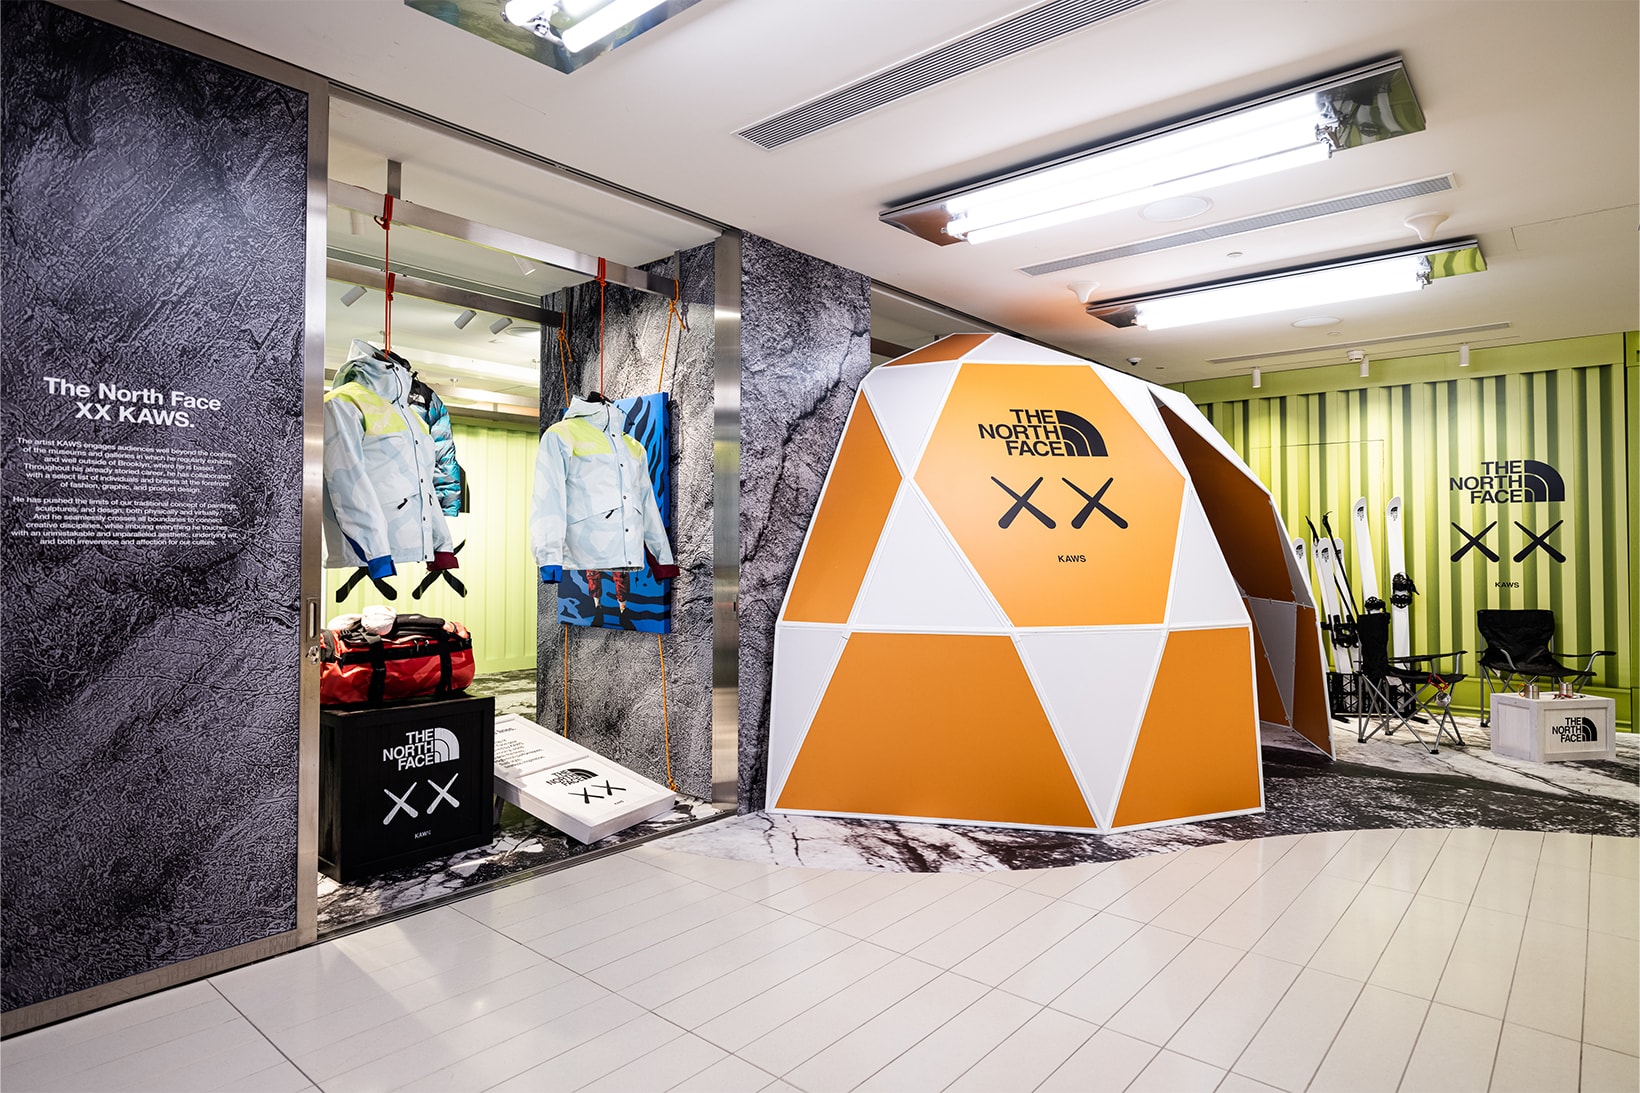 The North Face XX Kaws Collaboration Pop-Up Store LANDMARK Entrance